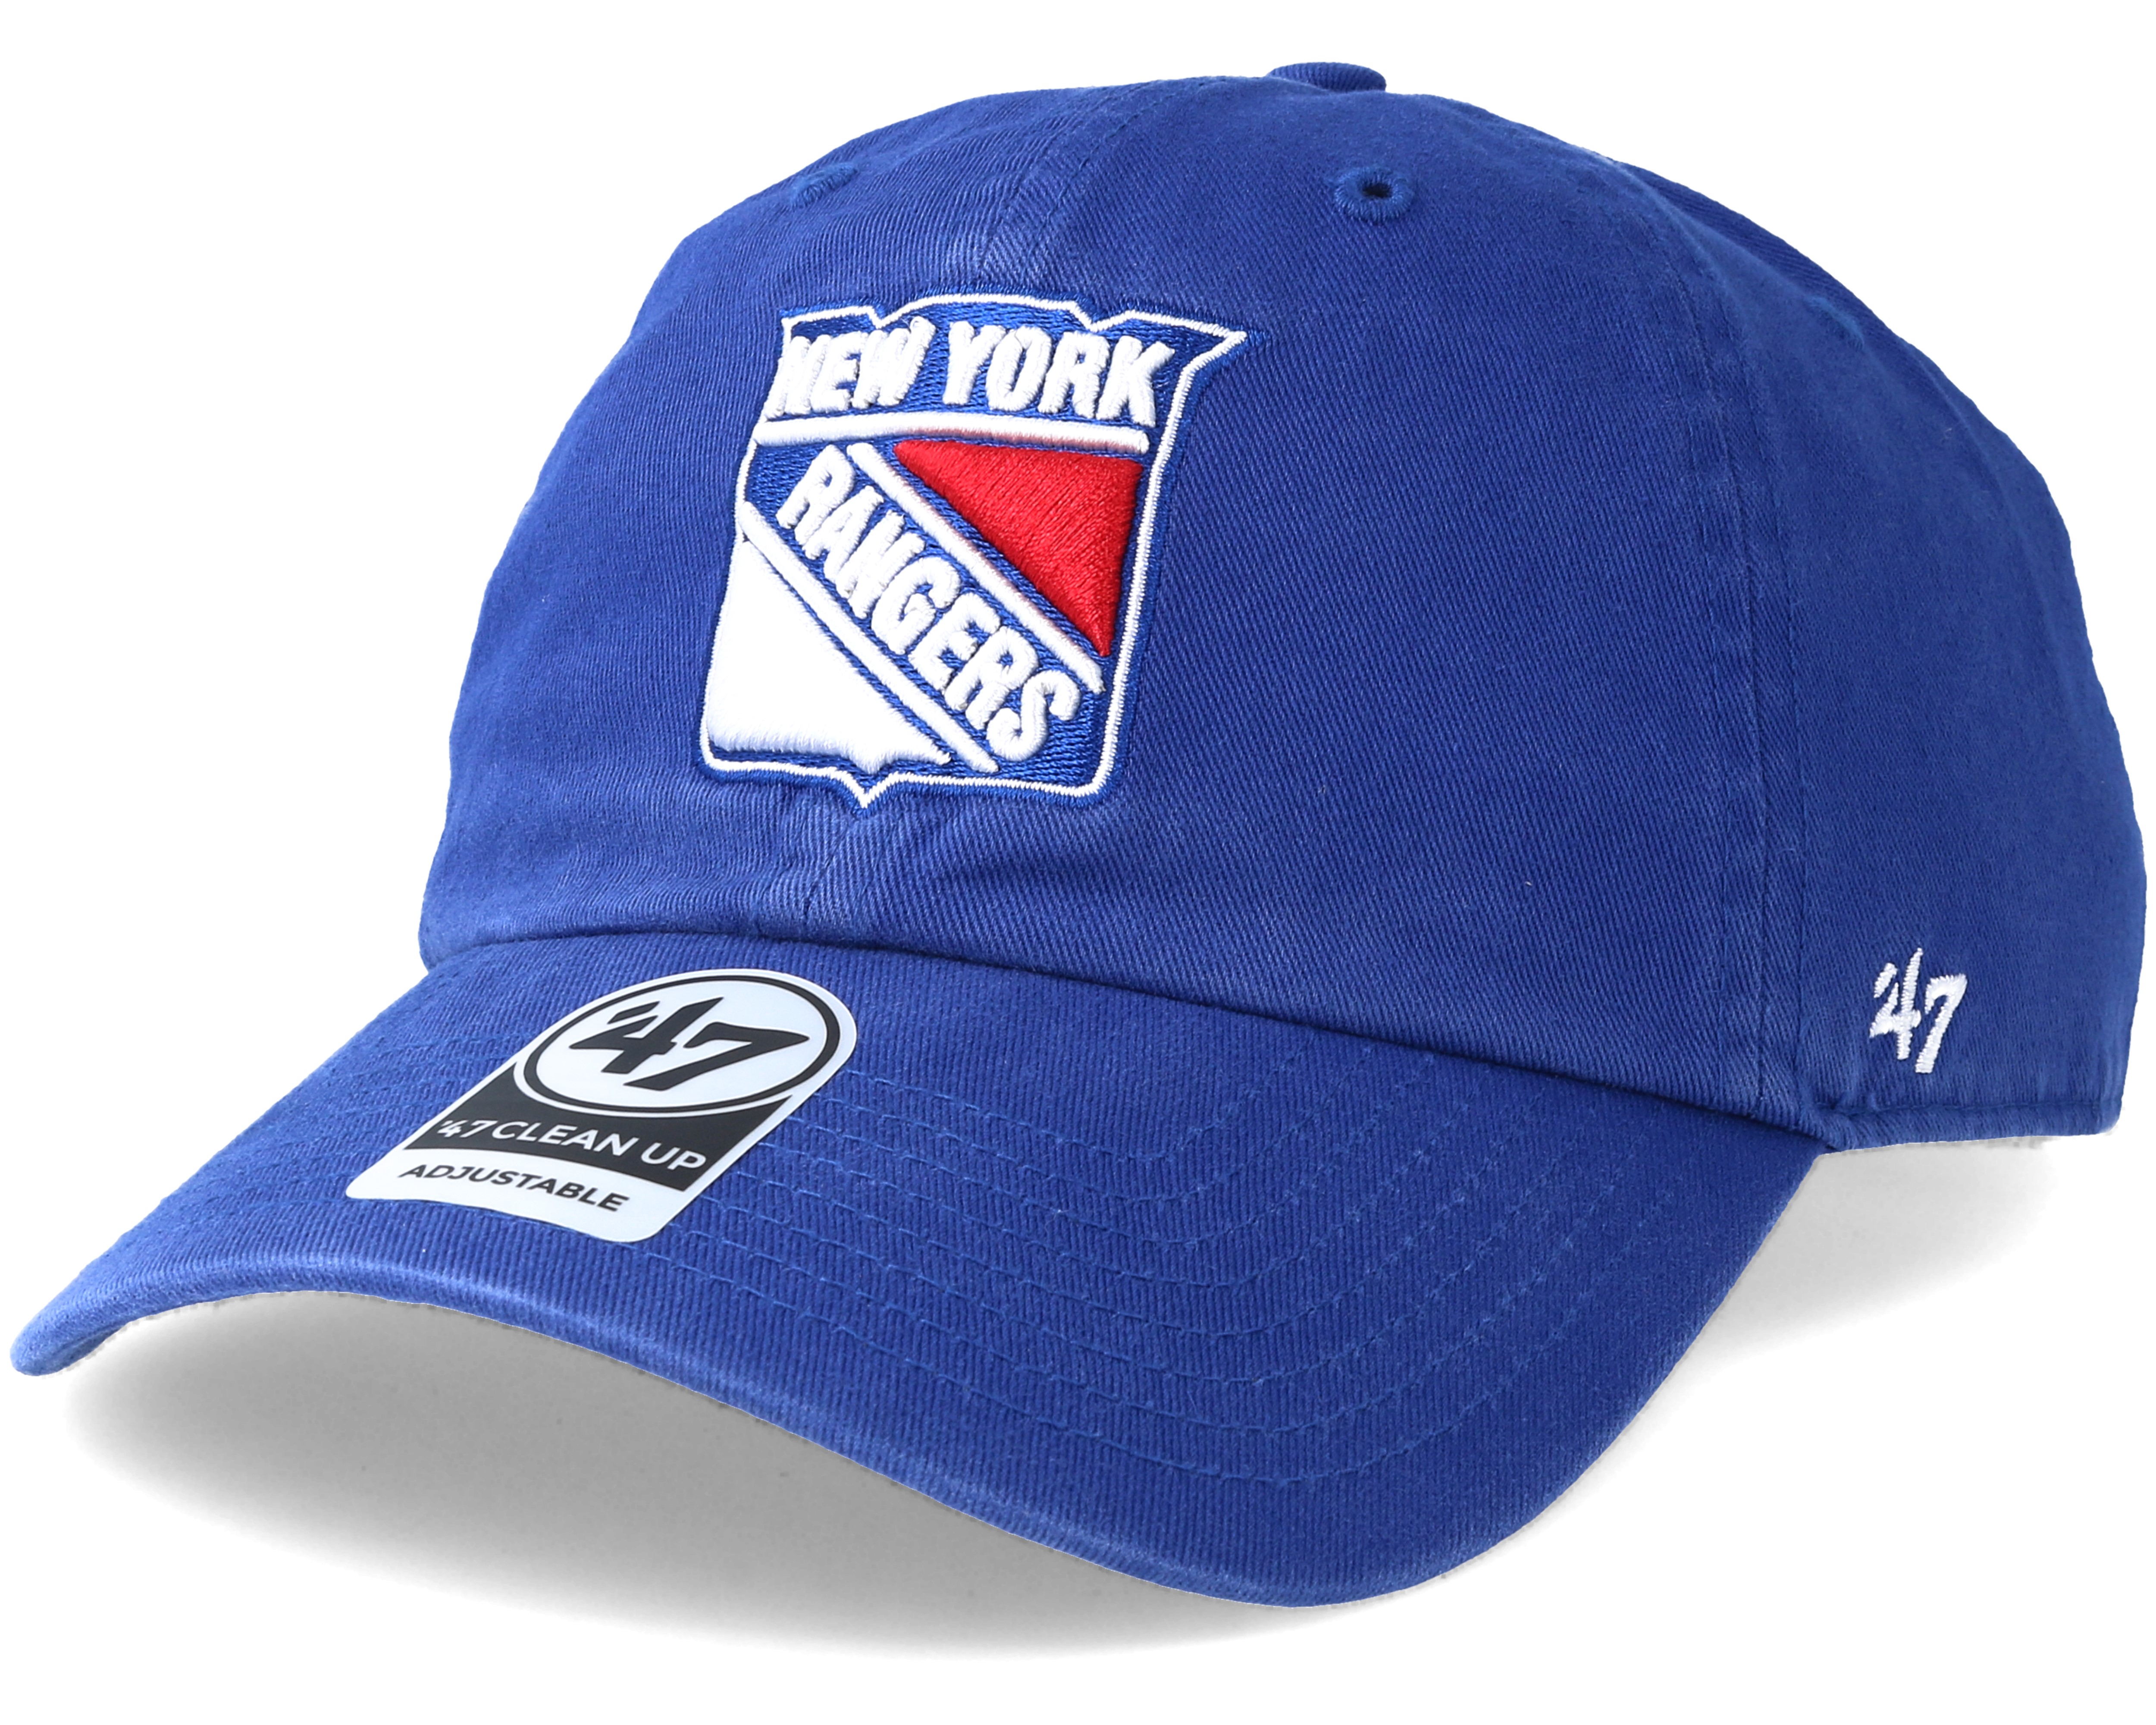 New York Rangers adjustable New Era cap